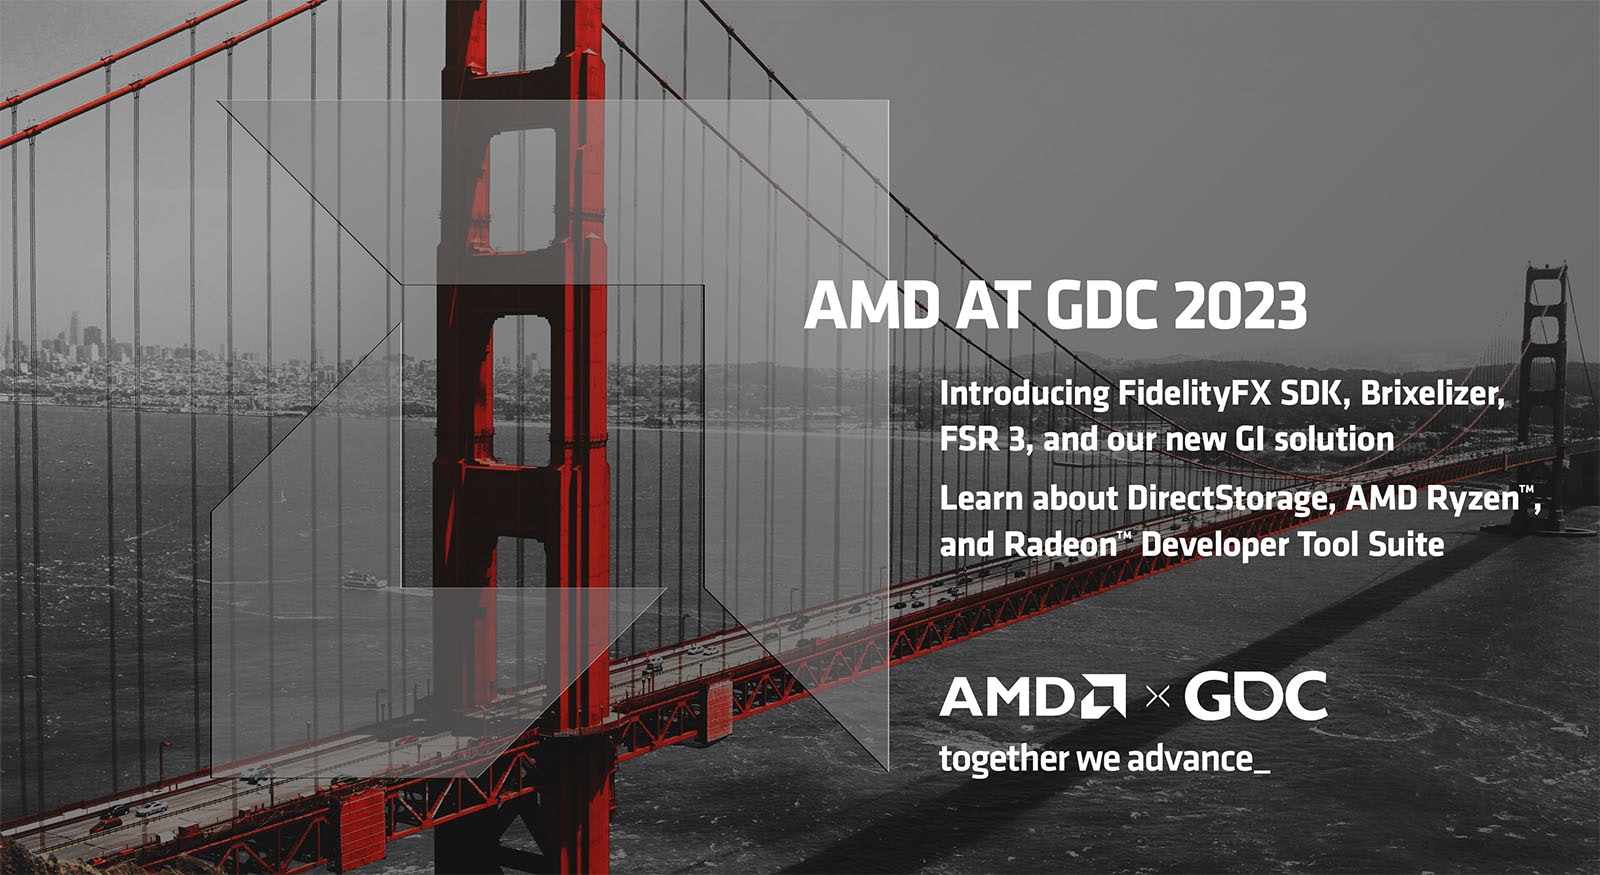 AMD at GDC 2023